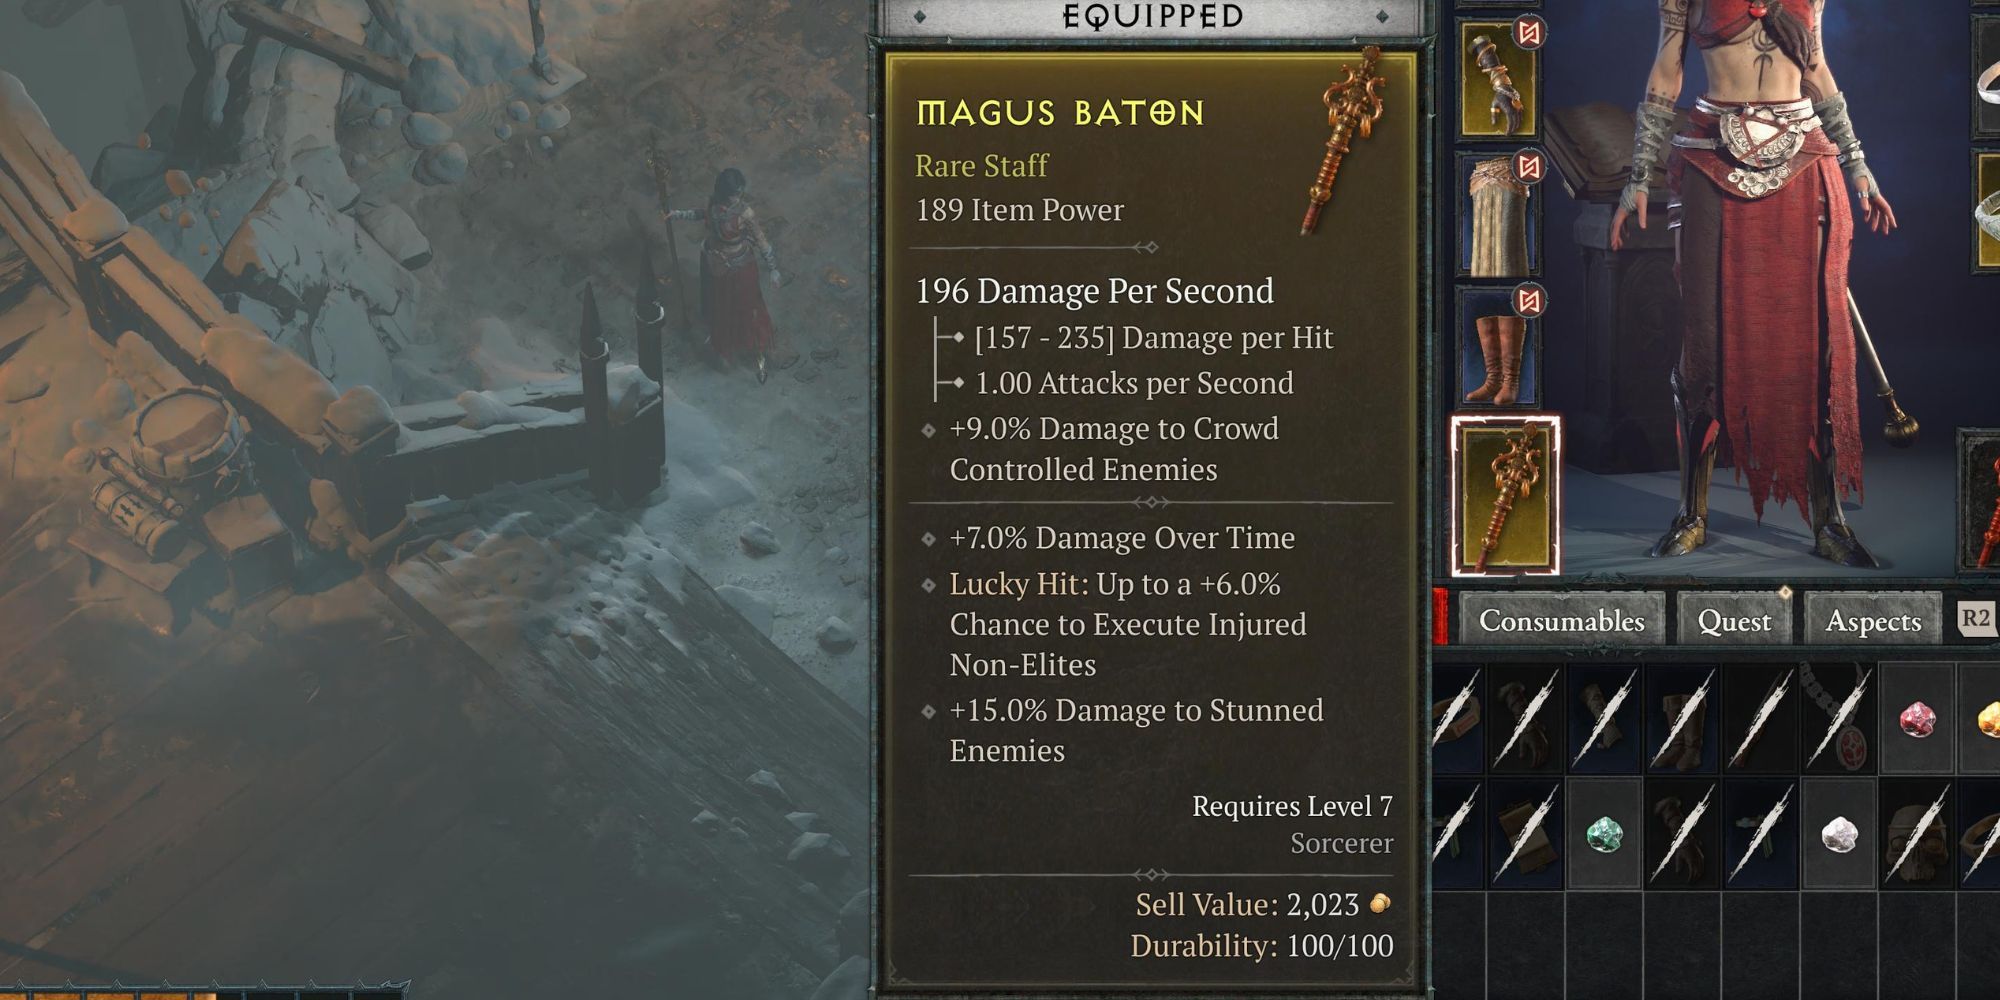 The Magus Baton in Diablo 4